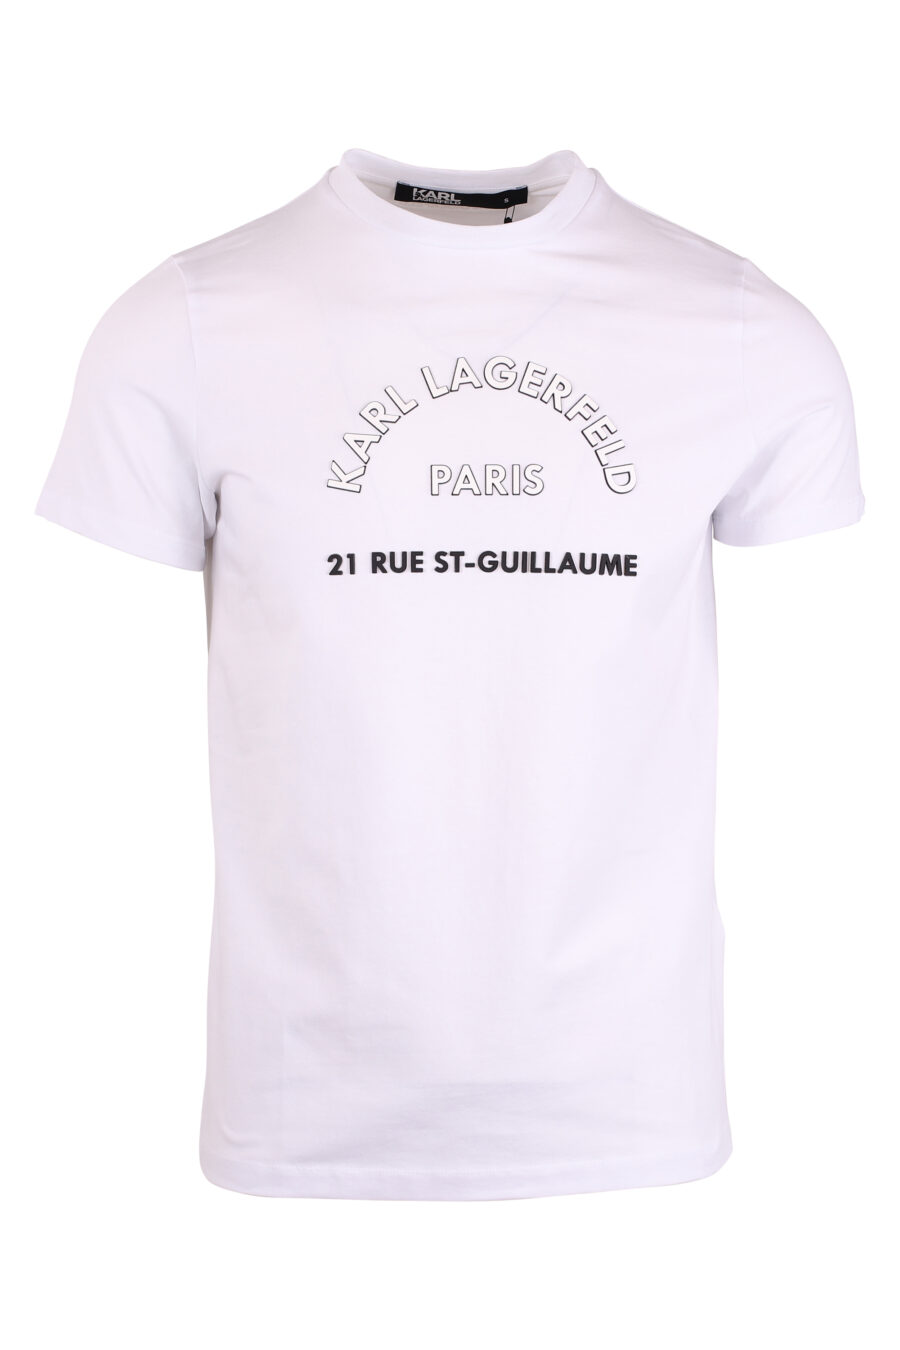 Camiseta blanca con logo "rue st-guillaume" de goma - IMG 4334